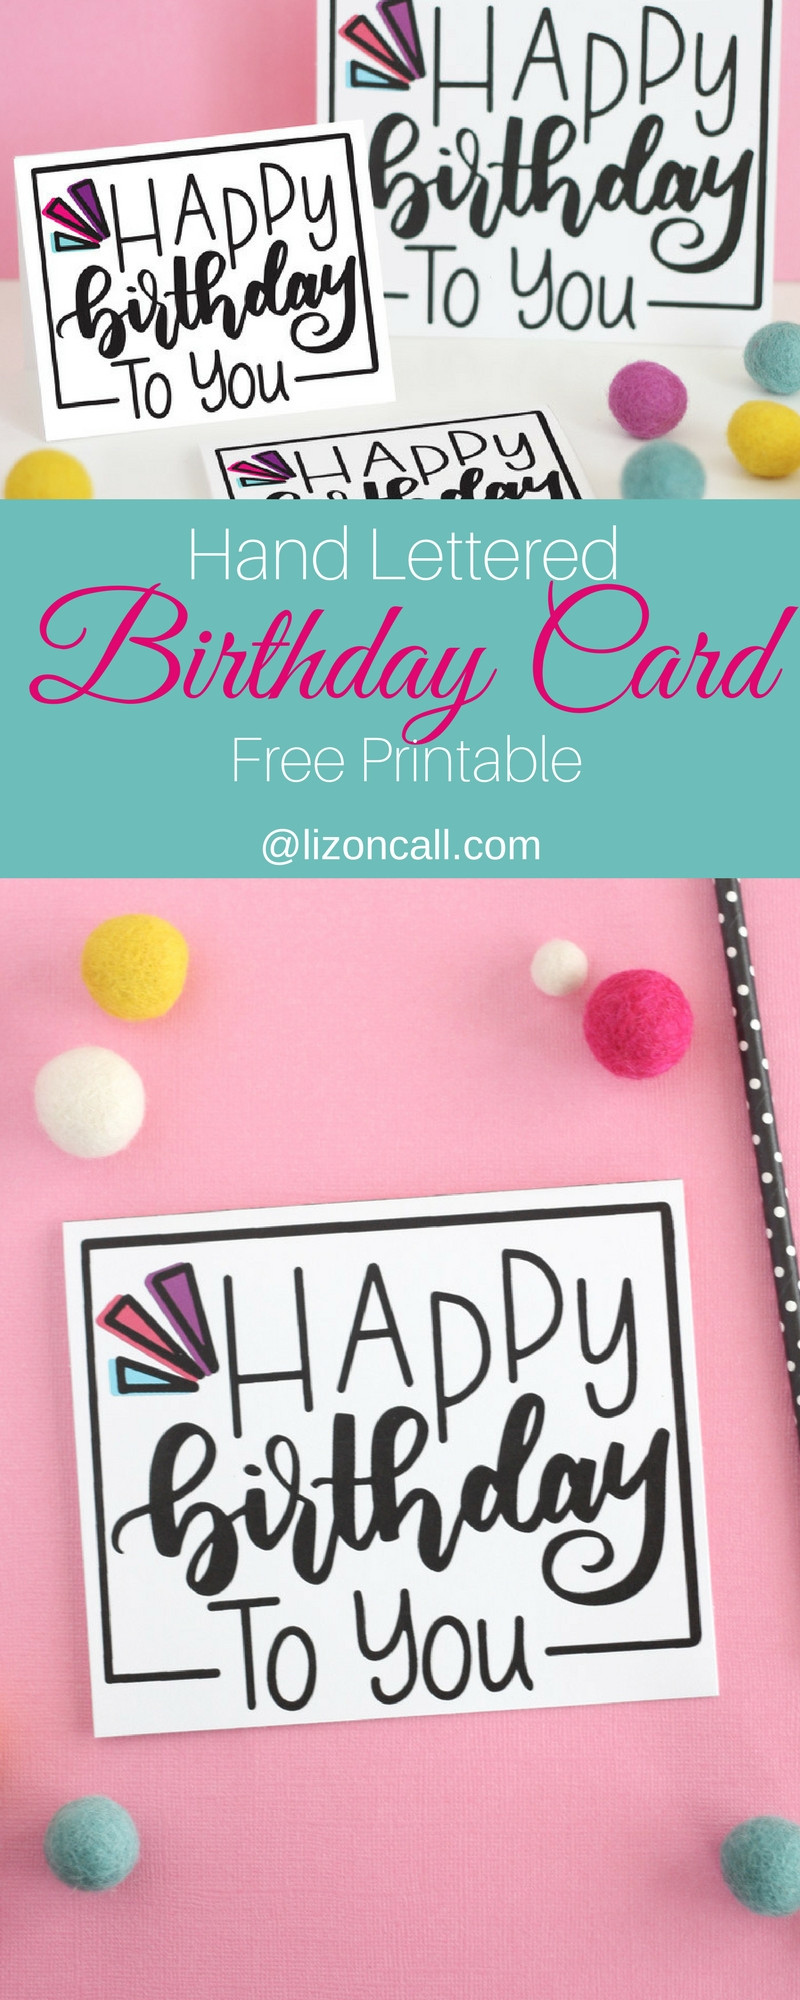 Print A Birthday Card
 Hand Lettered Free Printable Birthday Card Liz on Call